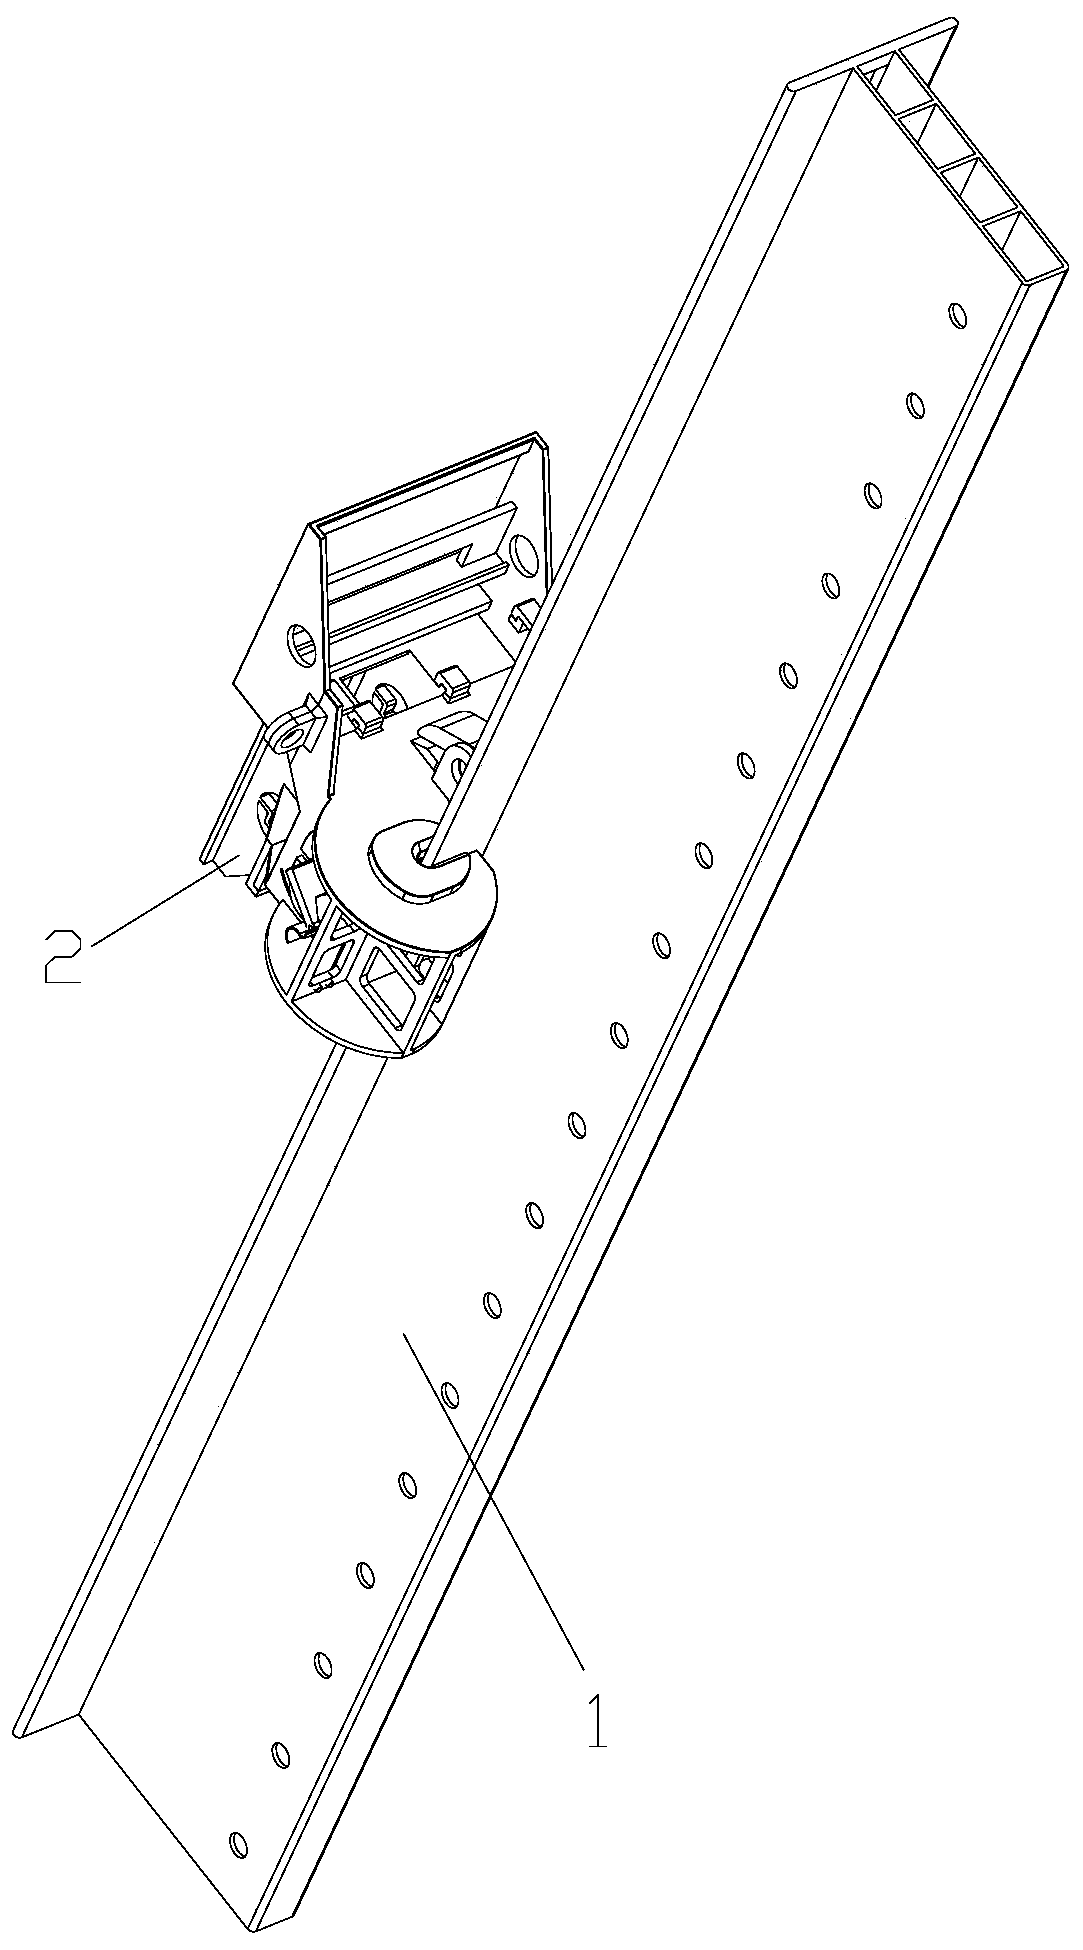 Climbing frame adopting rotary wheel centrifugal triggering type falling protector